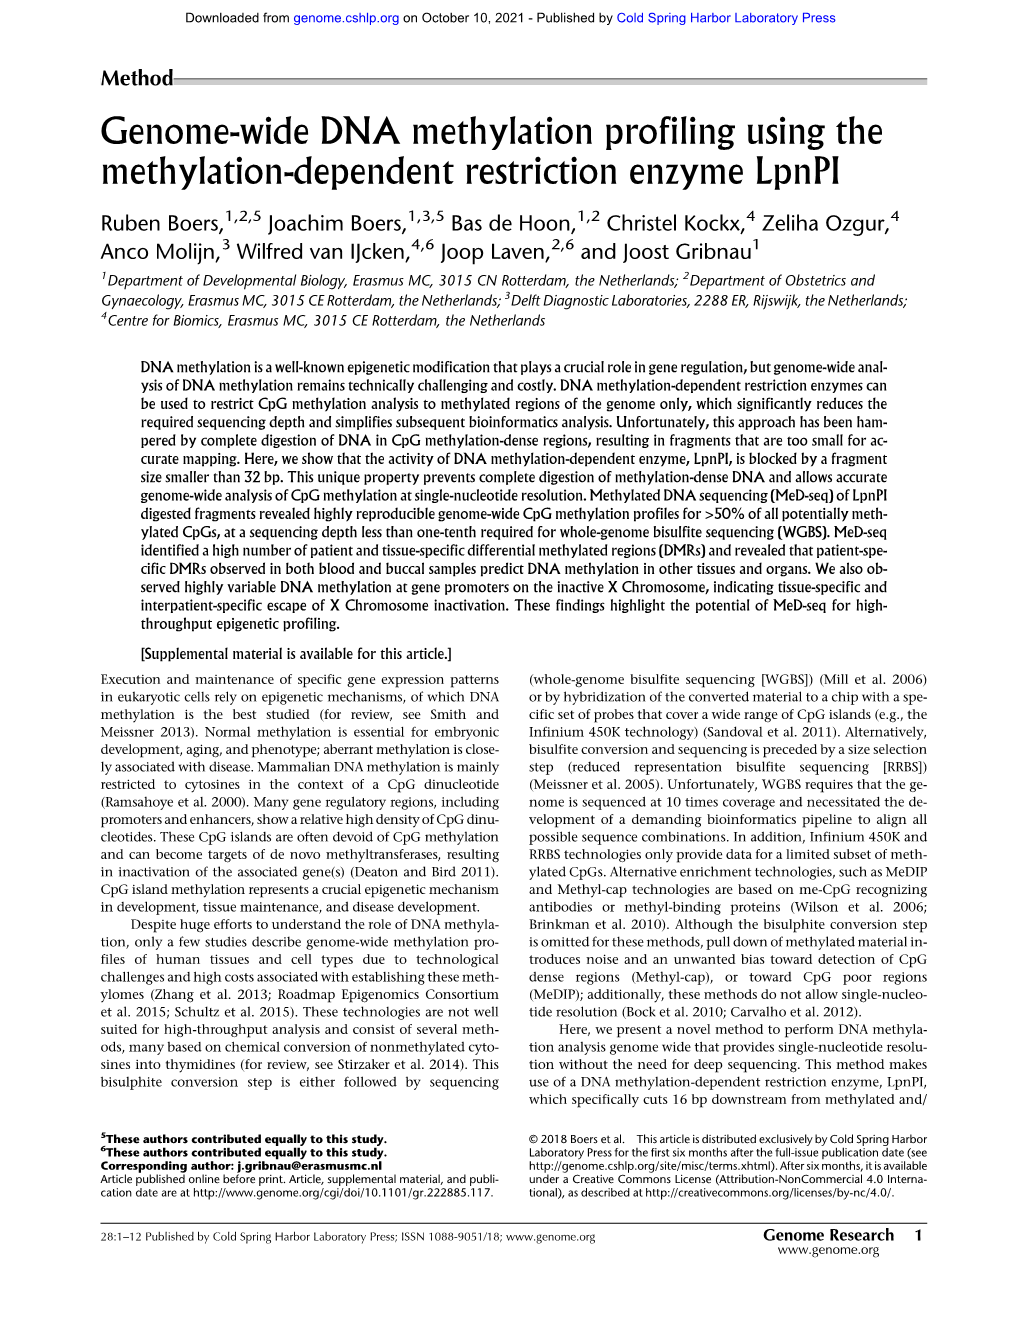 Genome-Wide DNA Methylation Profiling Using the Methylation-Dependent Restriction Enzyme Lpnpi